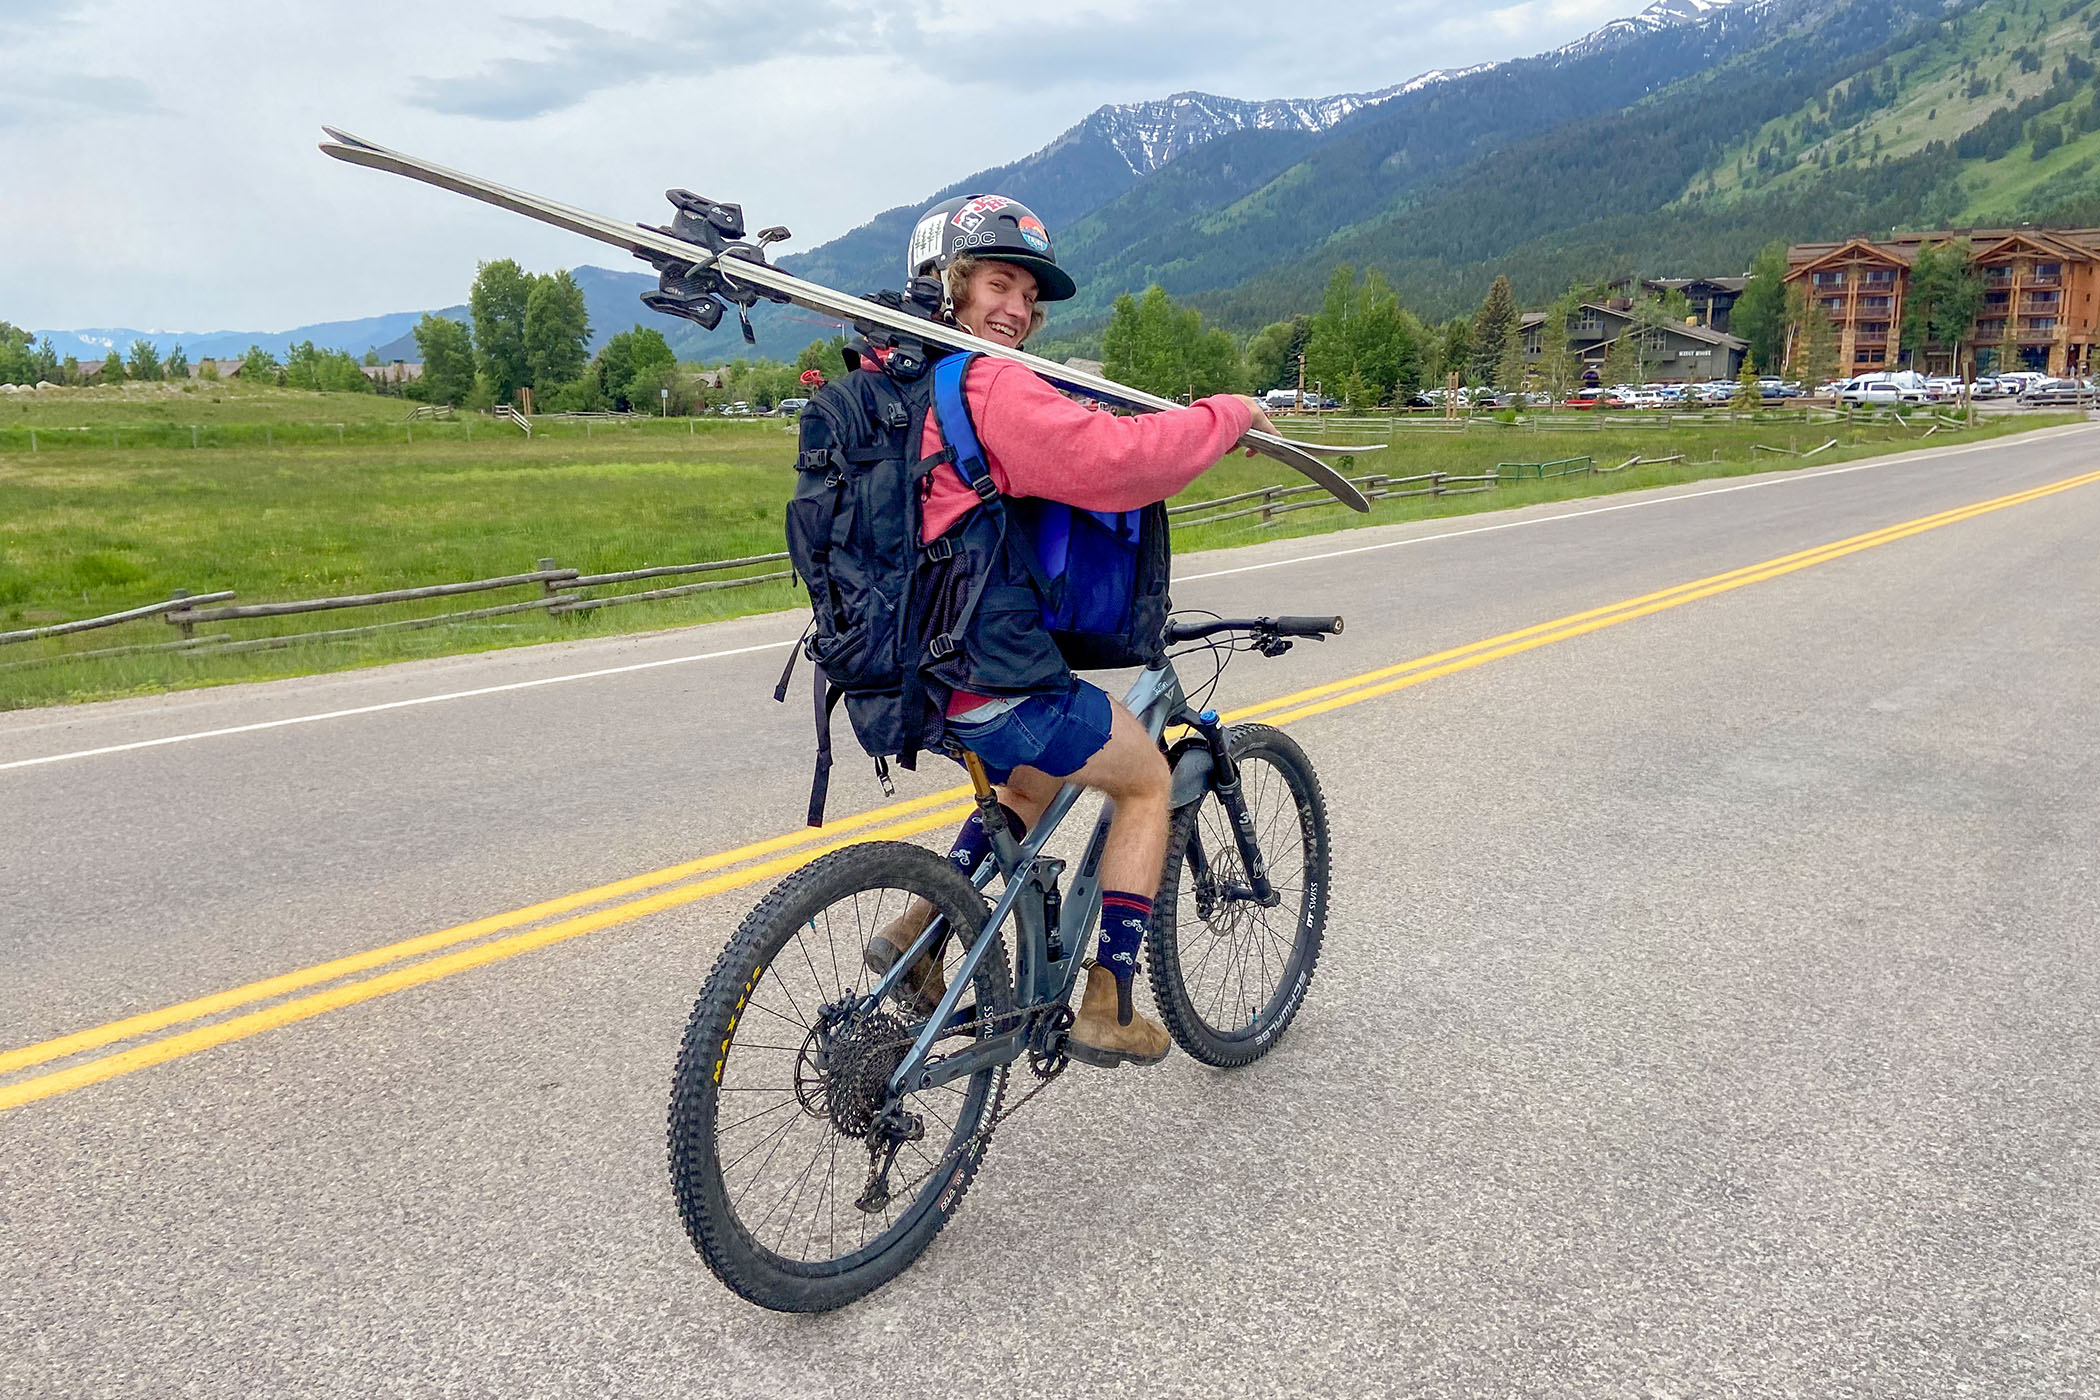 Person biking to Teton Village carrying skis